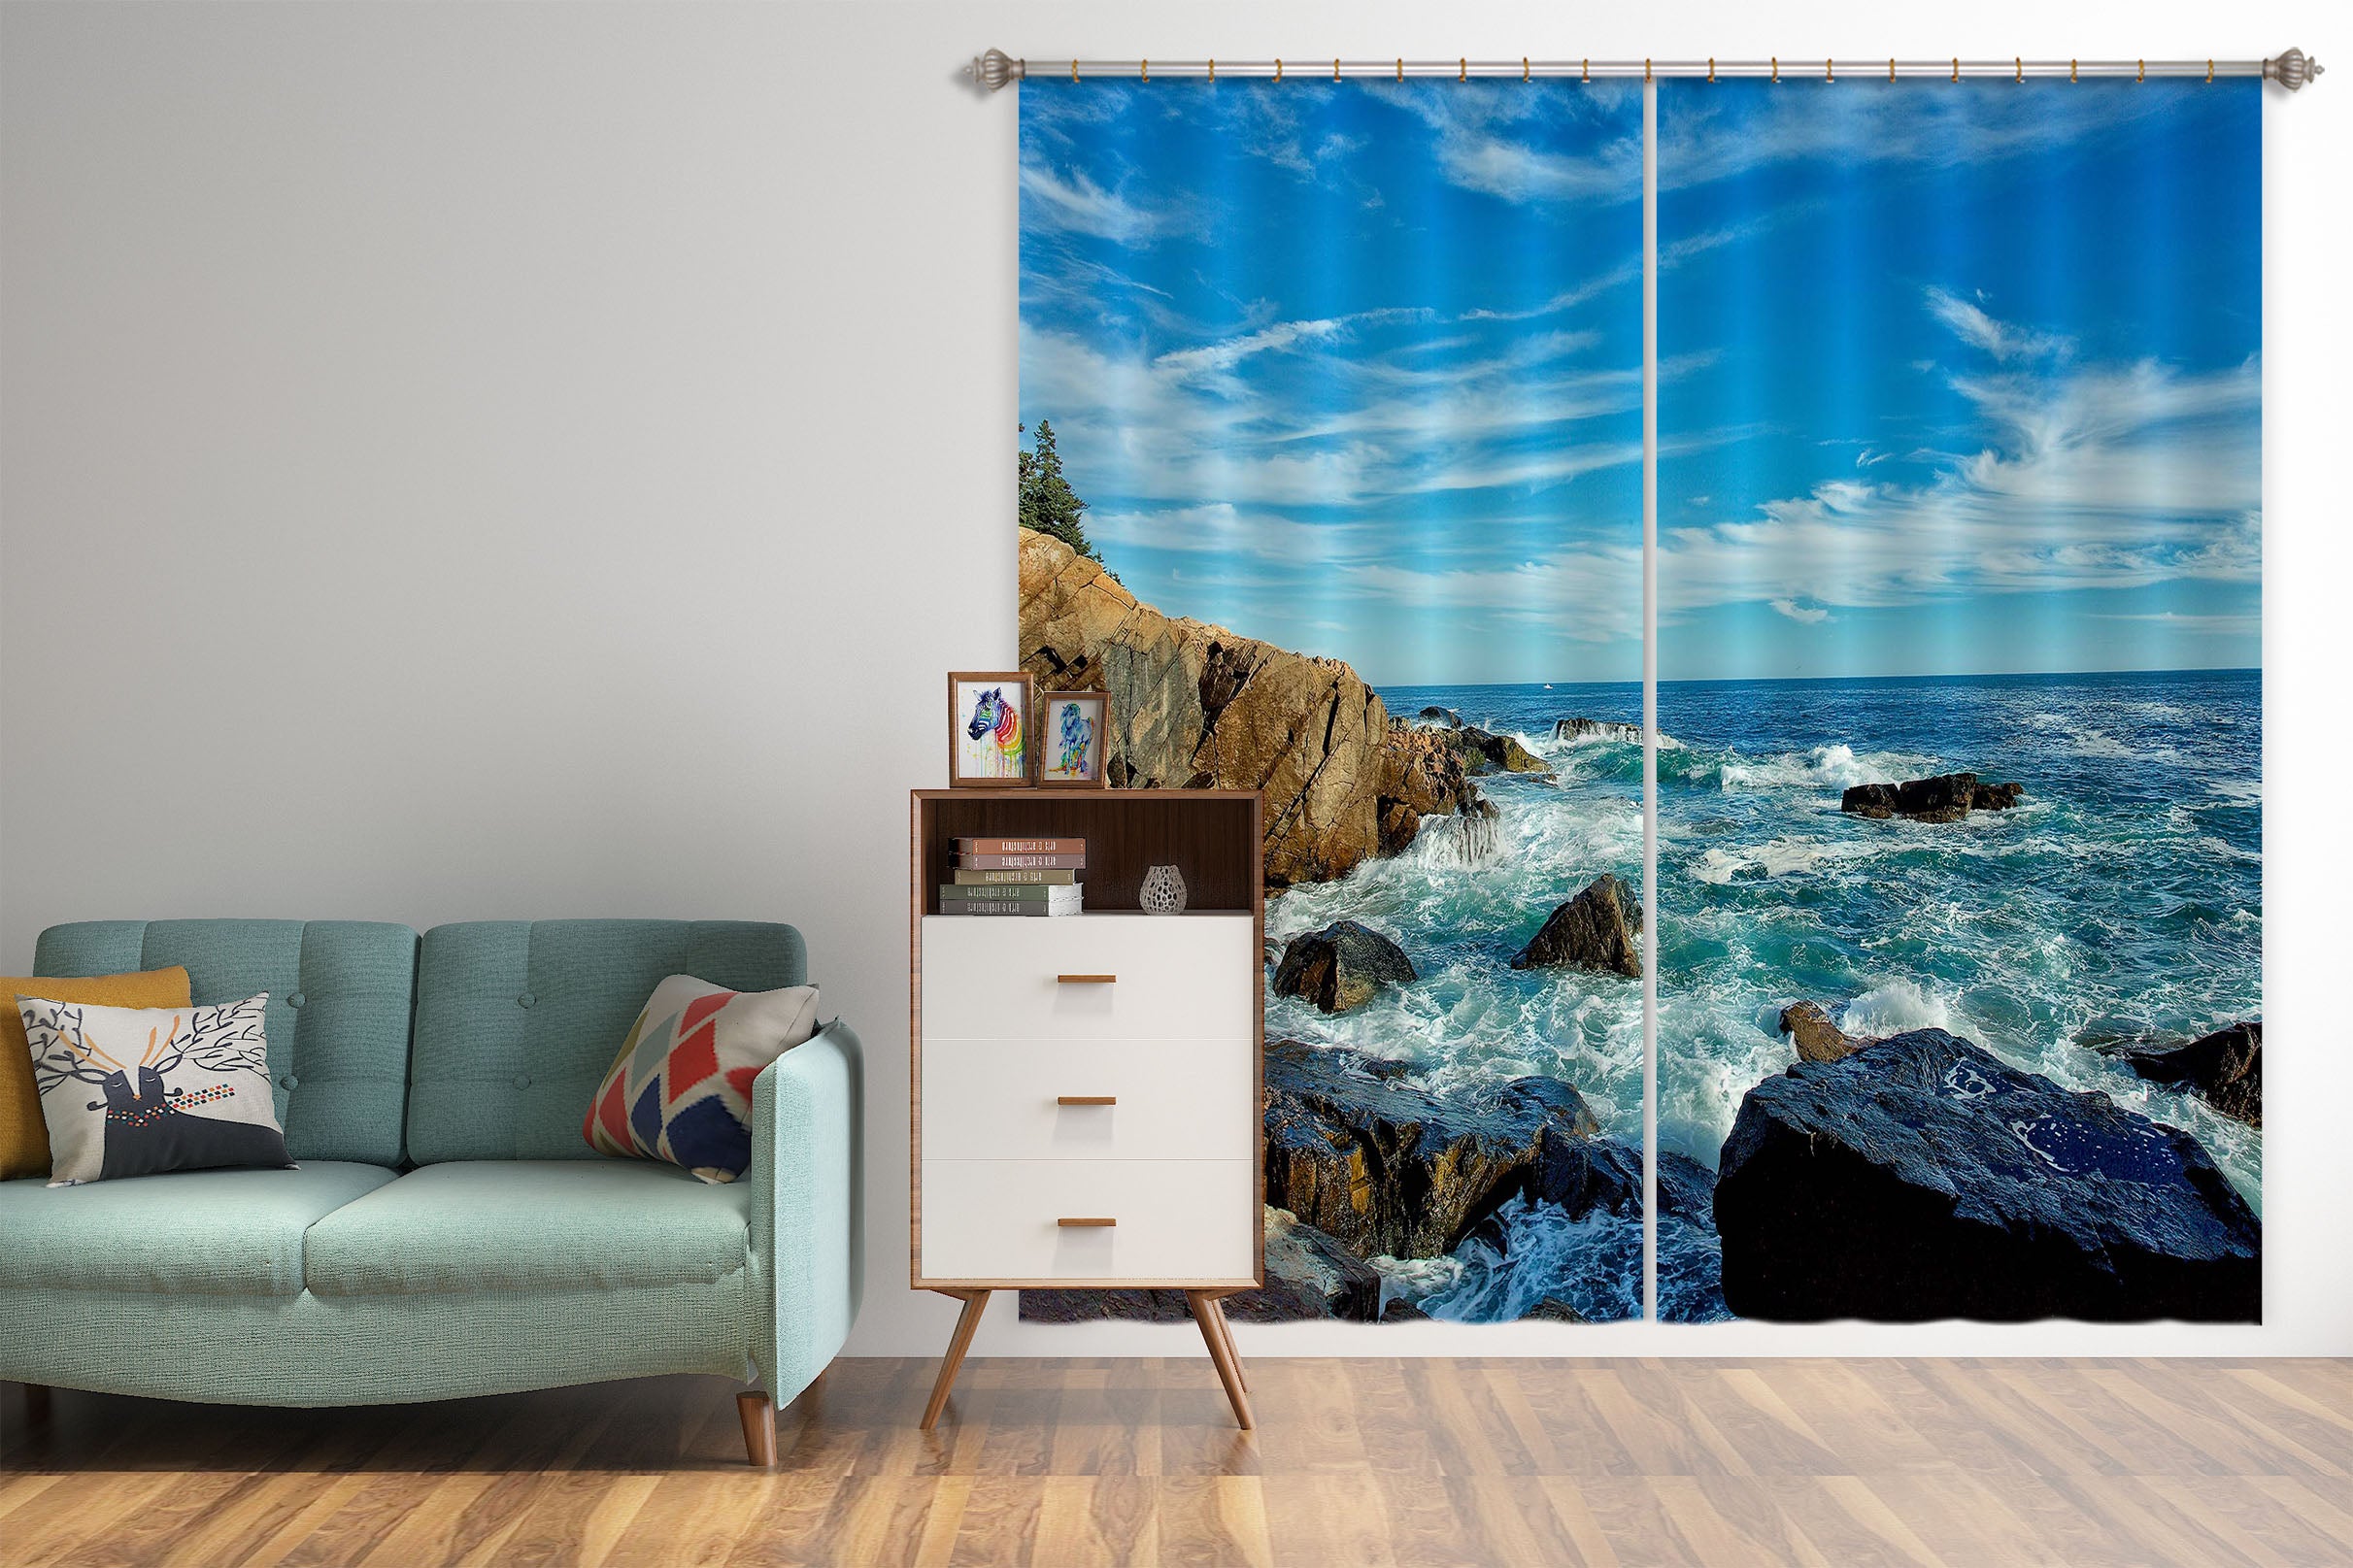 3D Seaside Stones 61207 Kathy Barefield Curtain Curtains Drapes